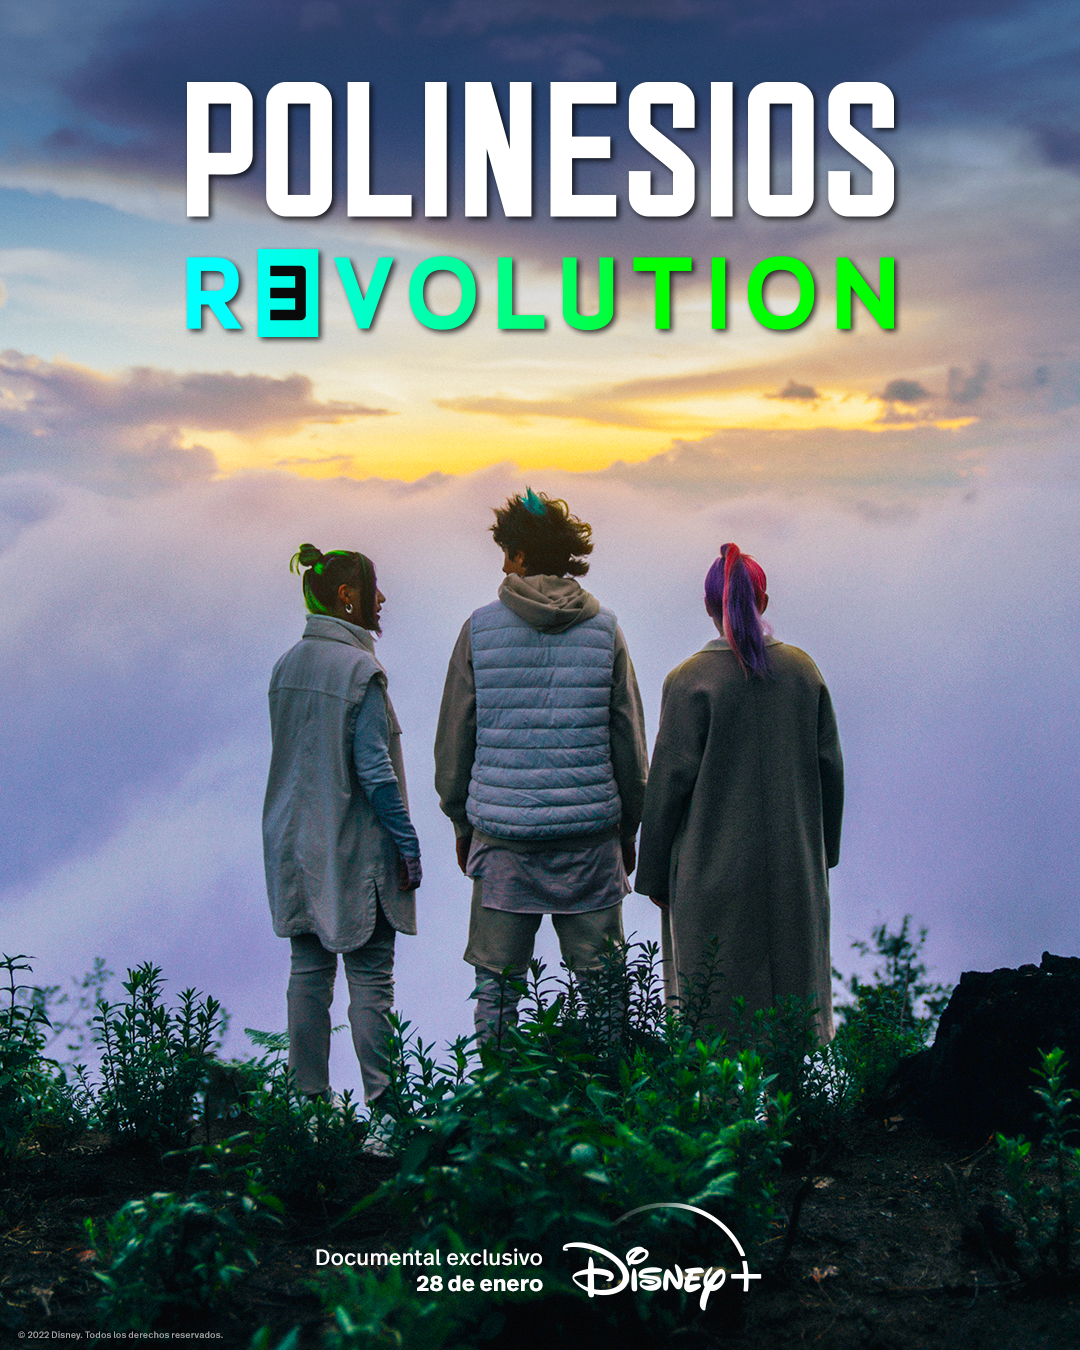 Polinesios Revolution